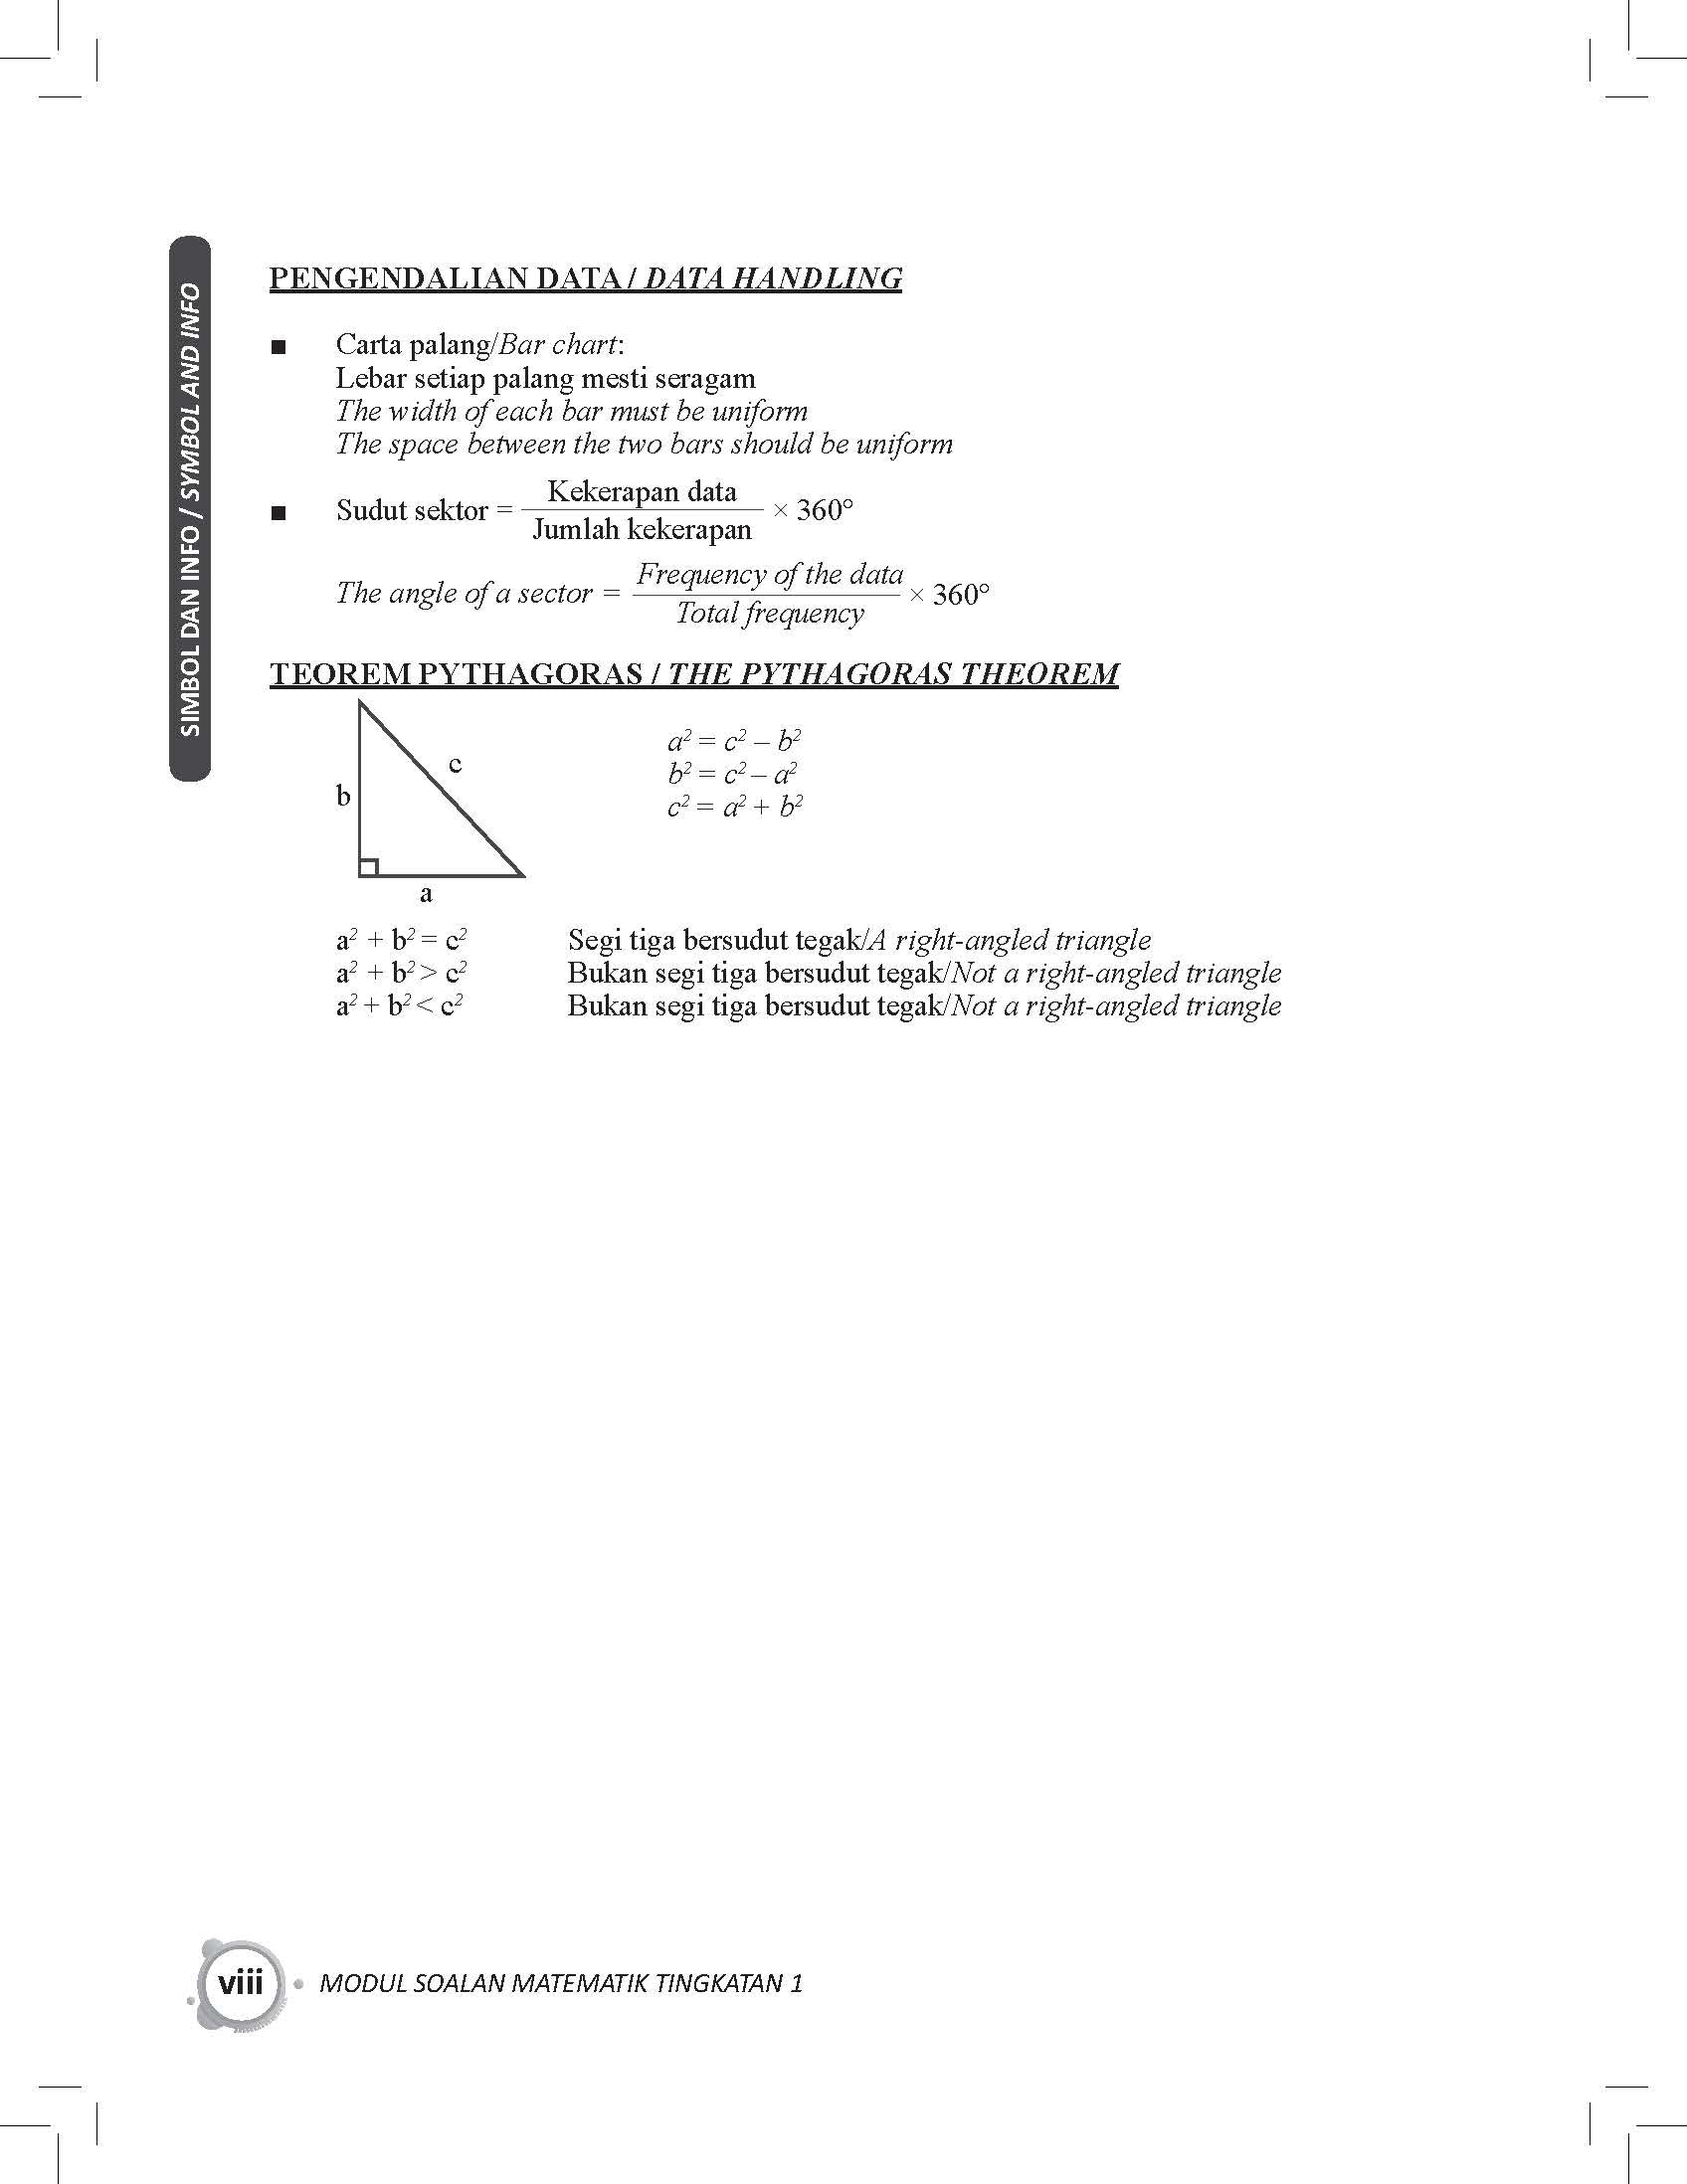 Get Smart Modul Soalan Matematik Tingkatan 1 - (TBBS1166)